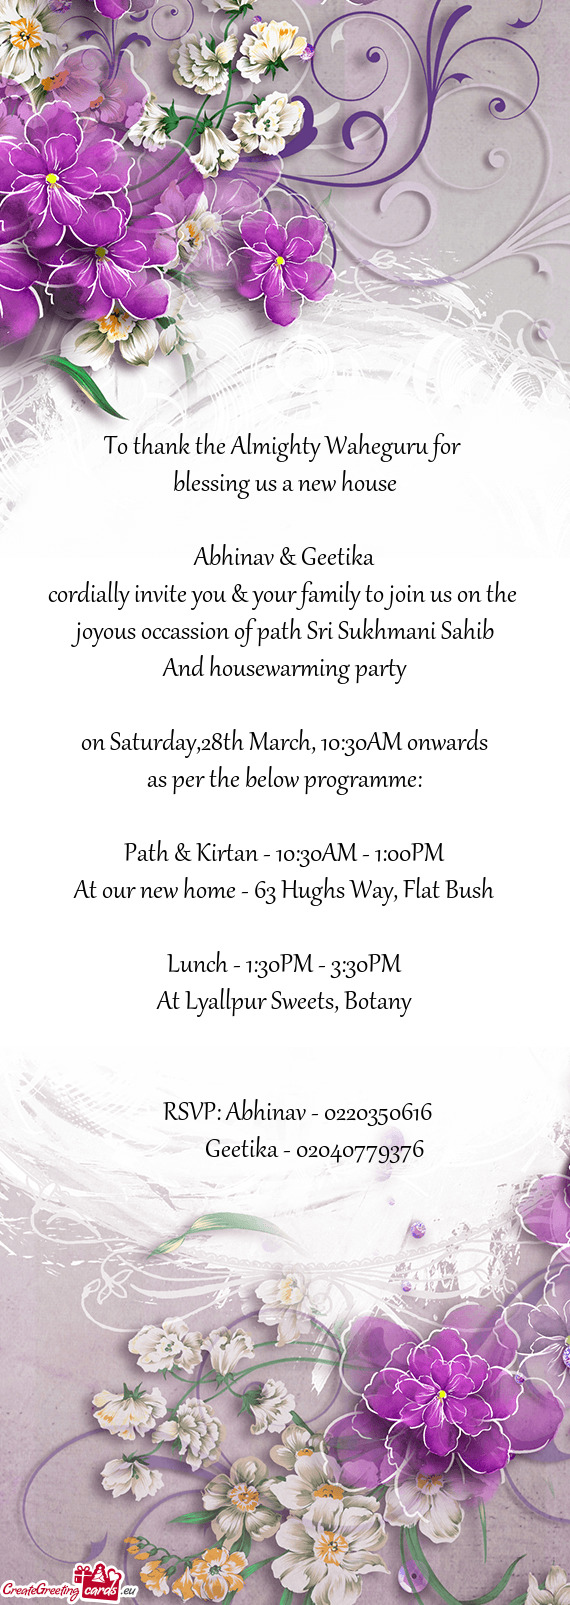 sukhmani sahib path invitation template